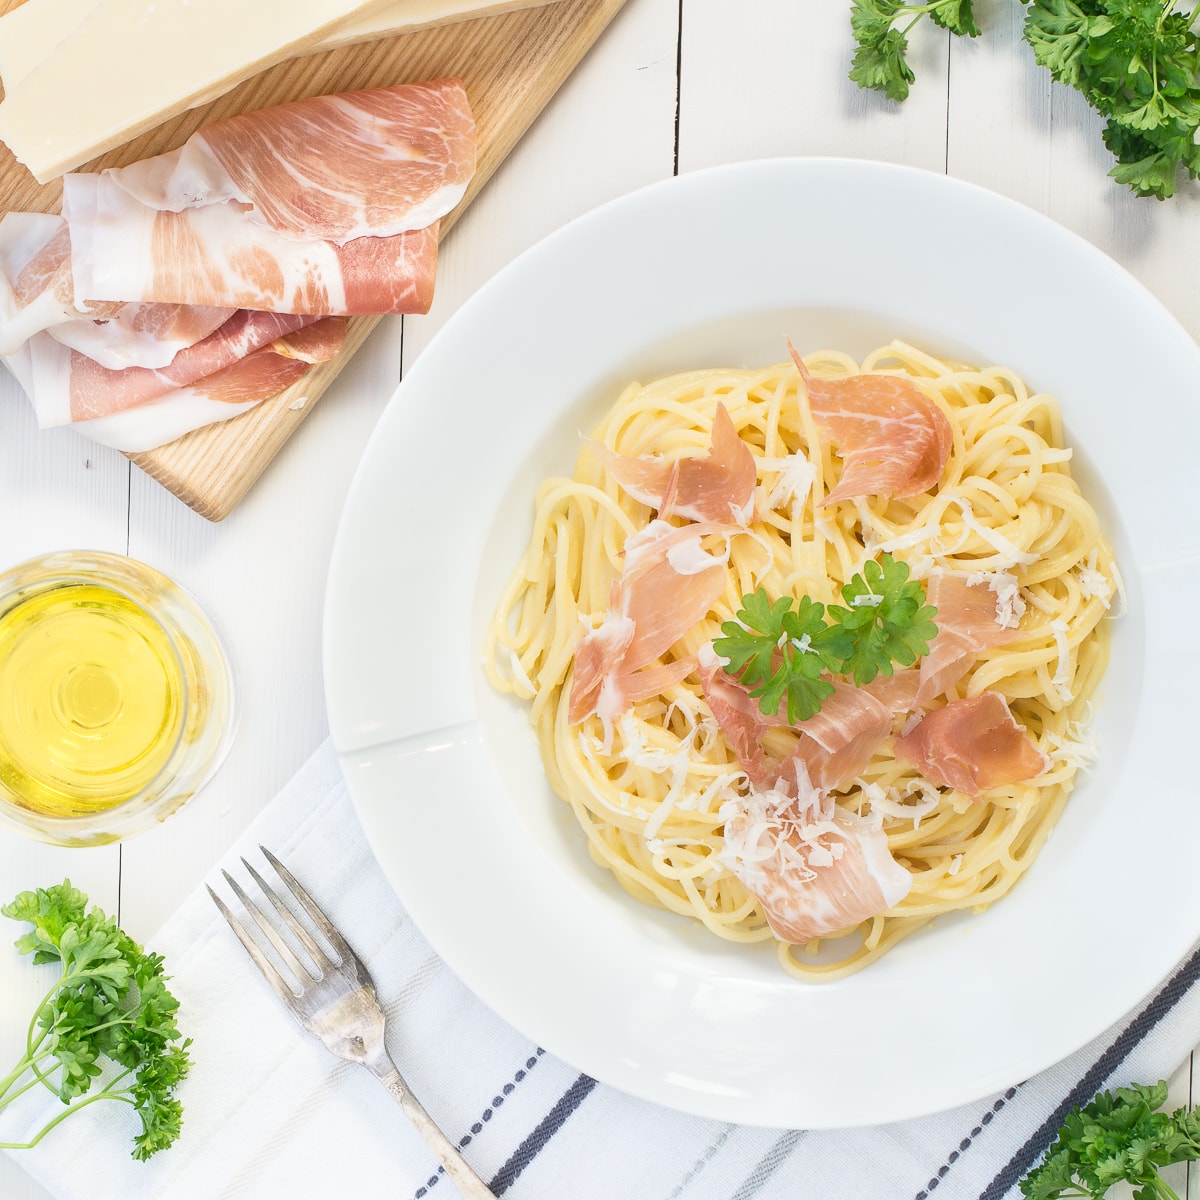 Looking down at a delicious bowl of creamy spaghetti carbonara made with Prosciutto di San Daniele and Grana Padano cheese.